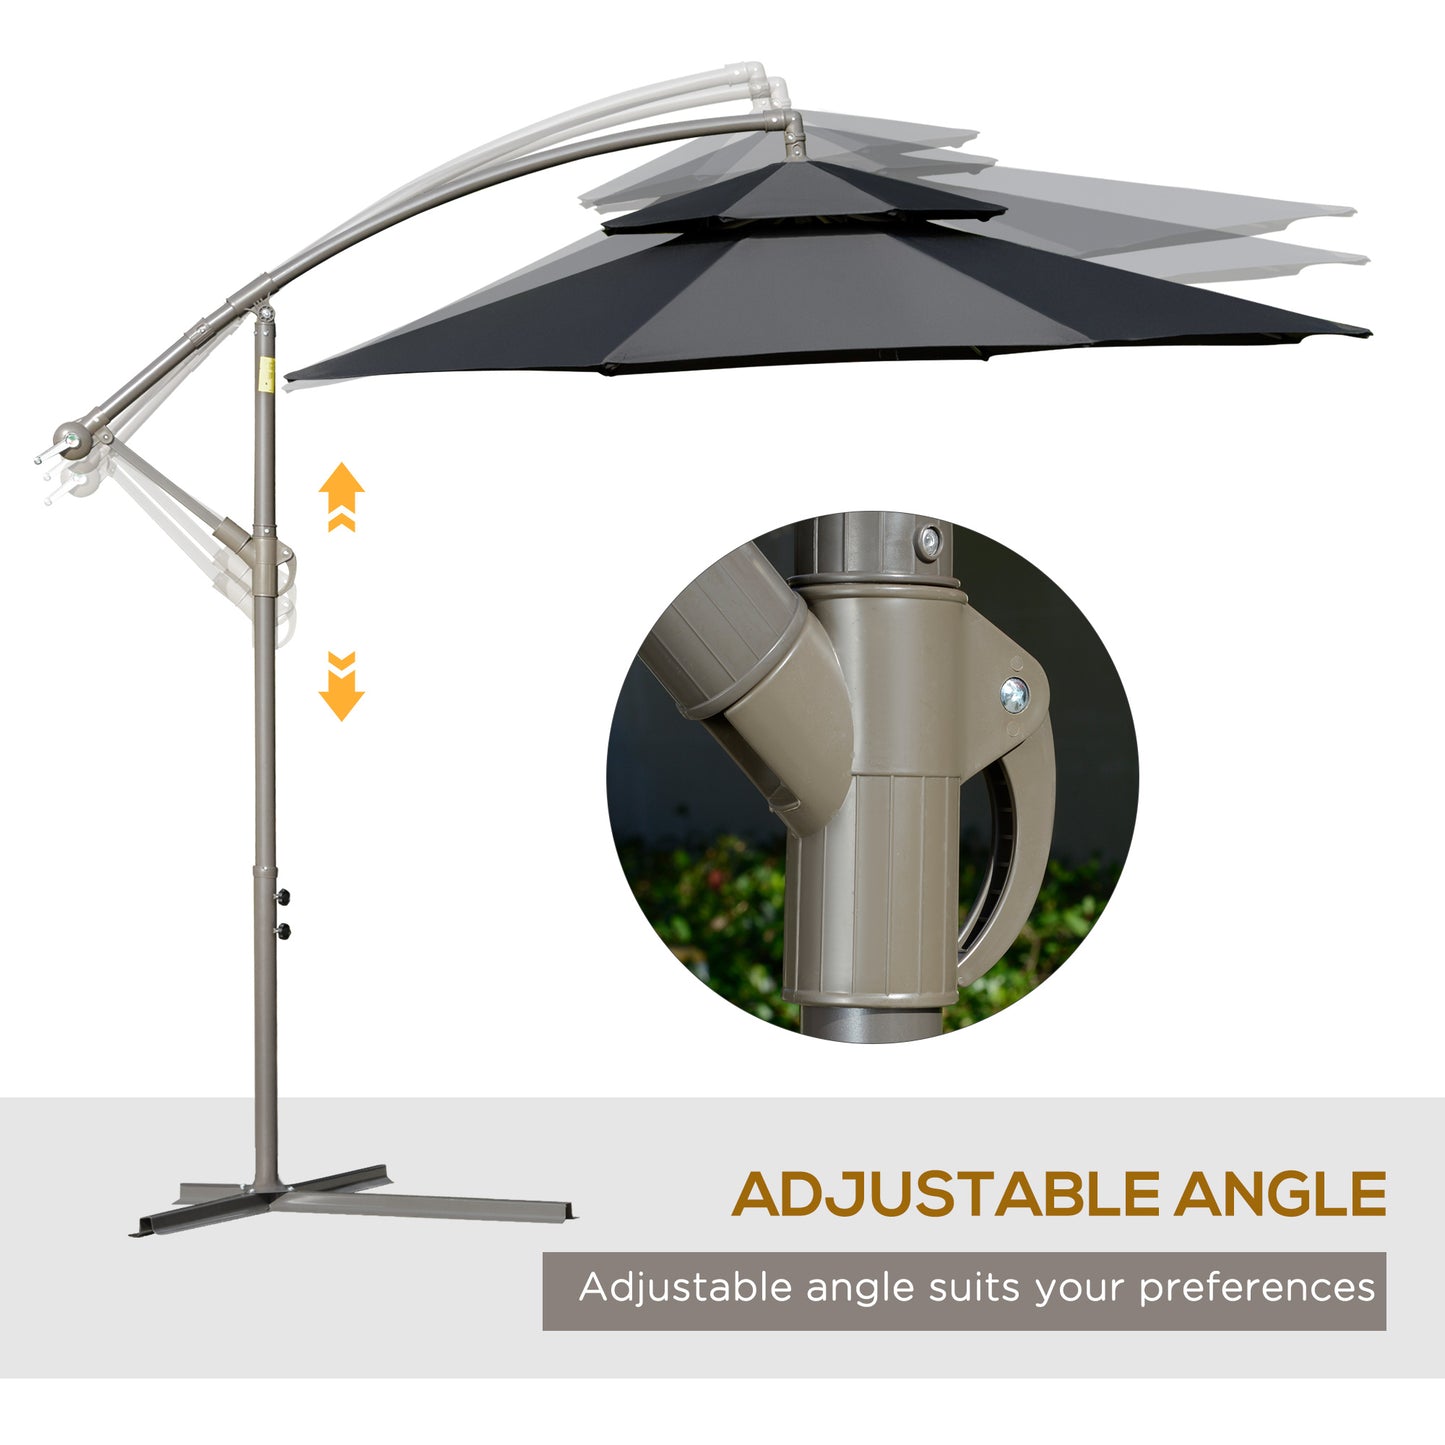 Outsunny 2.7m Garden Banana Parasol Cantilever Umbrella with Crank Handle, Double Tier Canopy and Cross Base for Outdoor, Hanging Sun Shade, Black w/ Canopy, Crank,